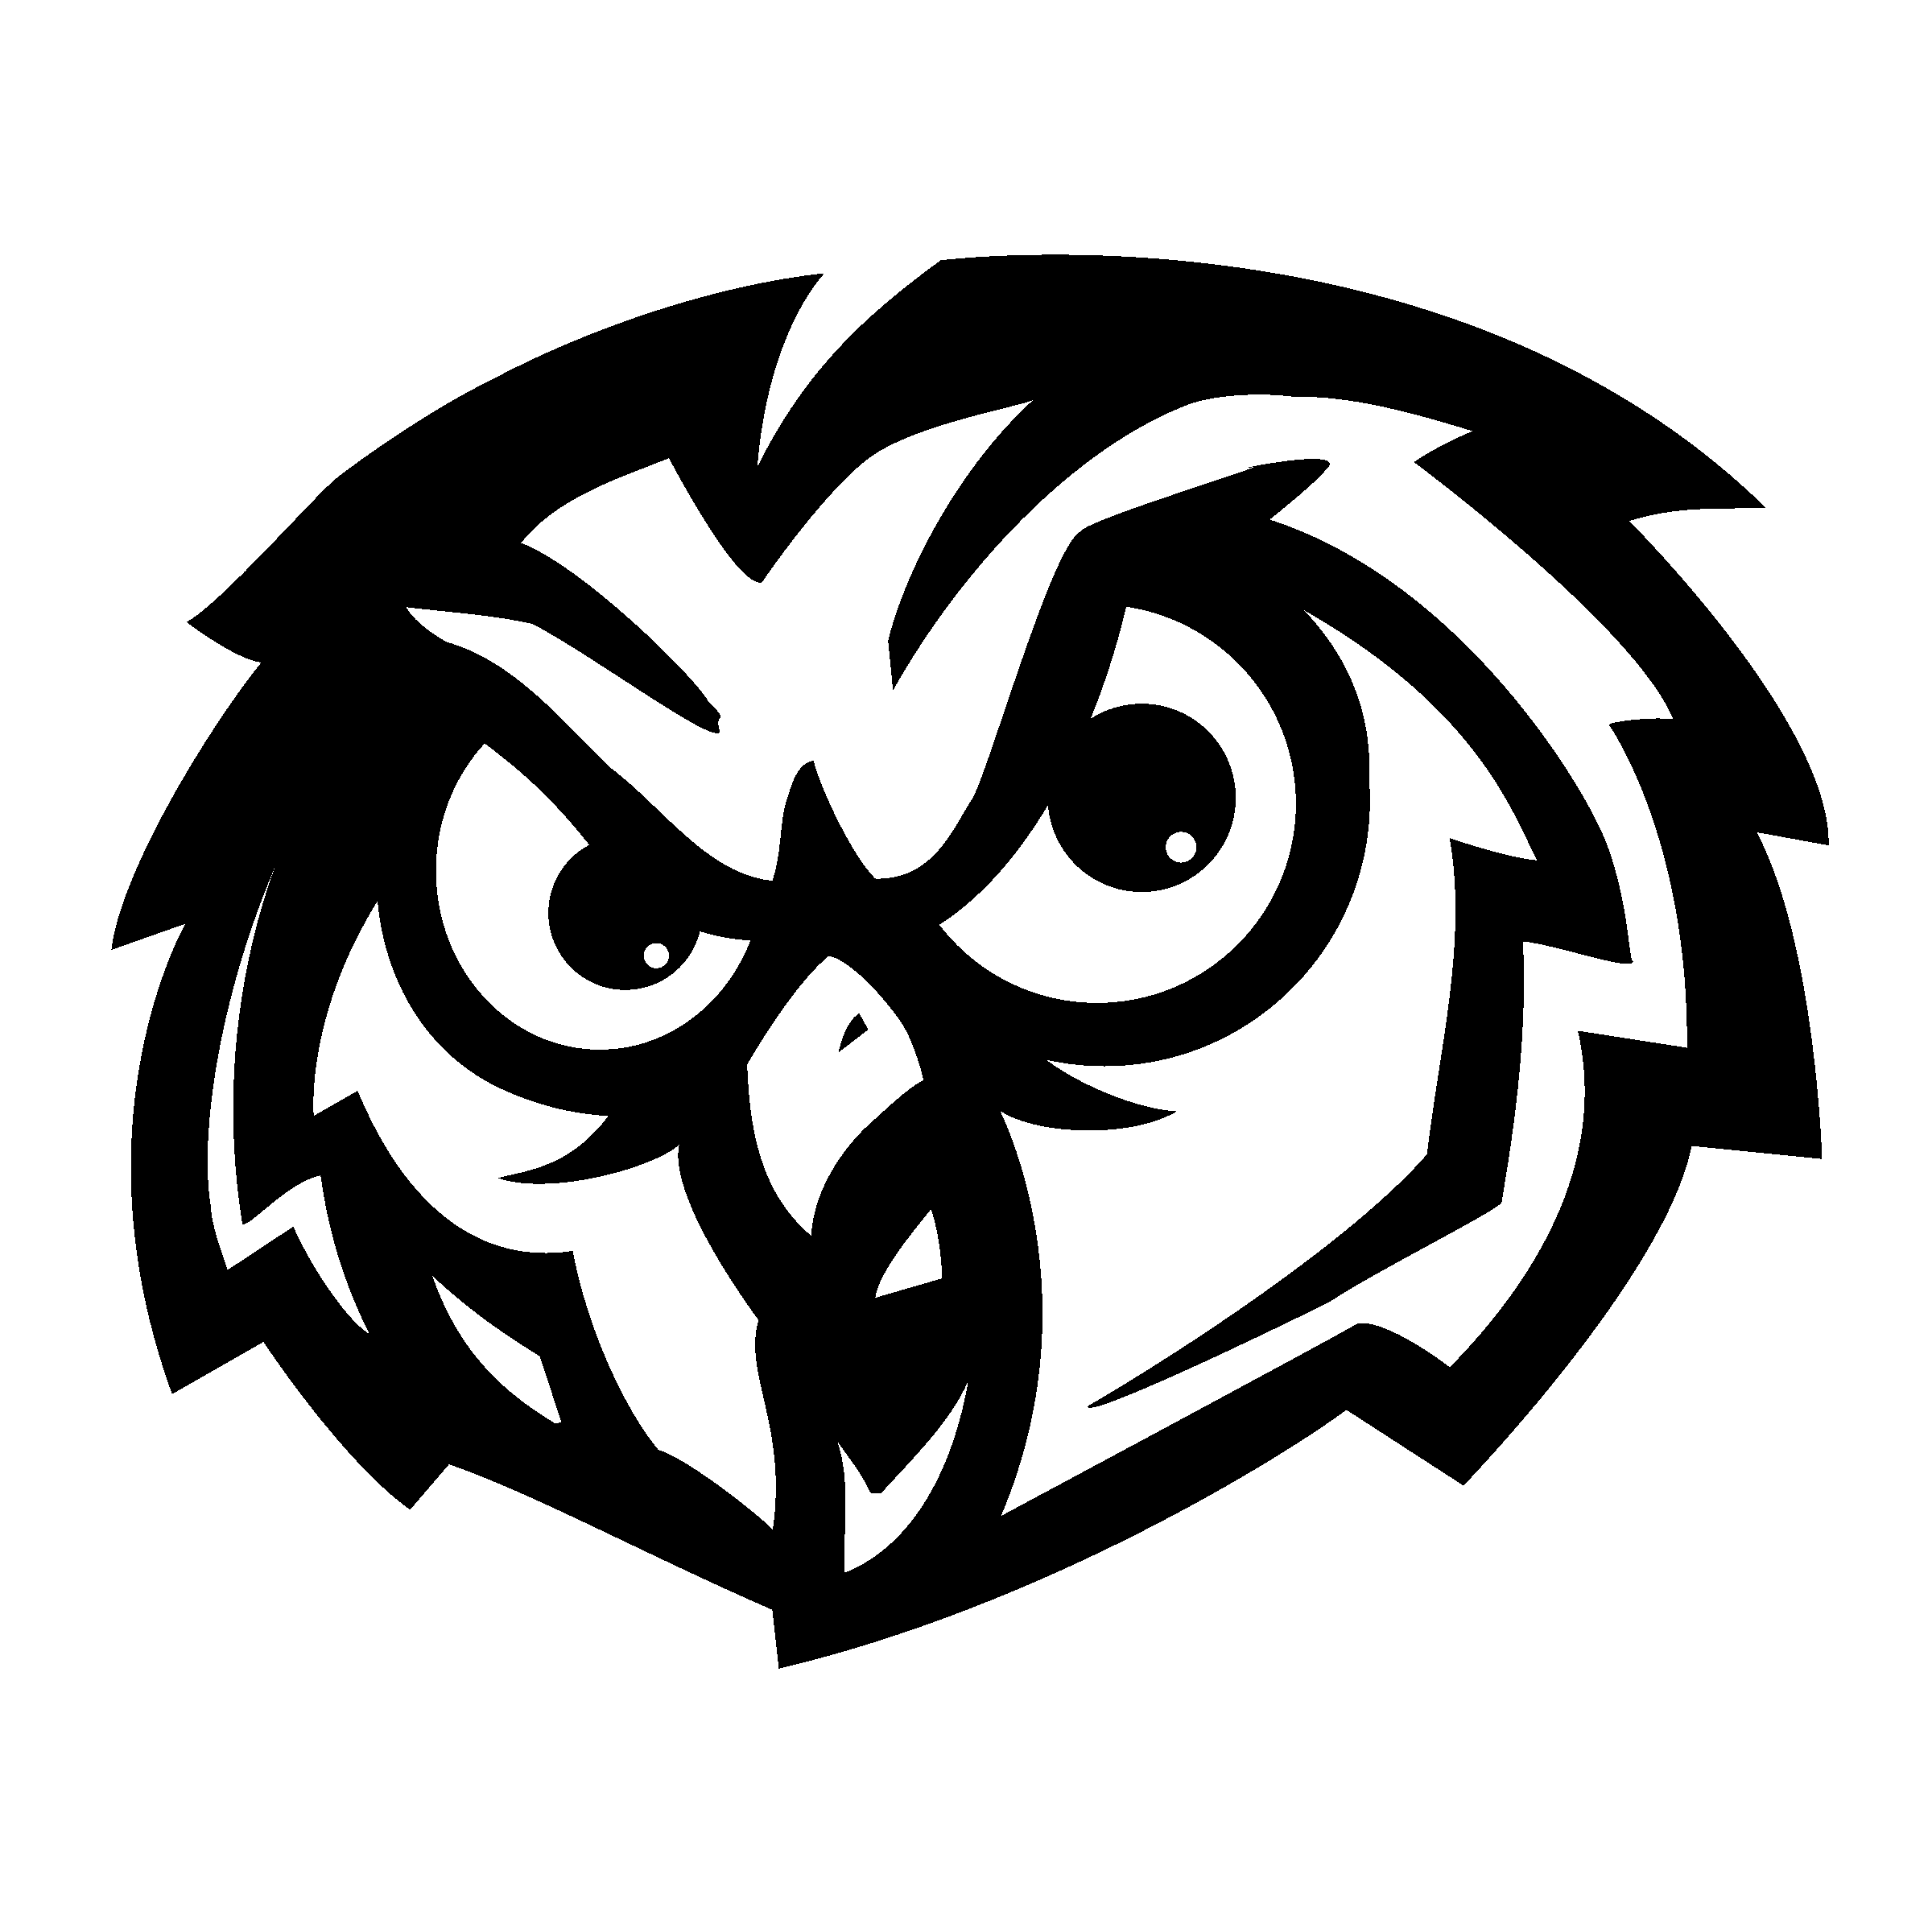 Temple Owls Logo - Temple Owls Logo PNG Transparent & SVG Vector - Freebie Supply